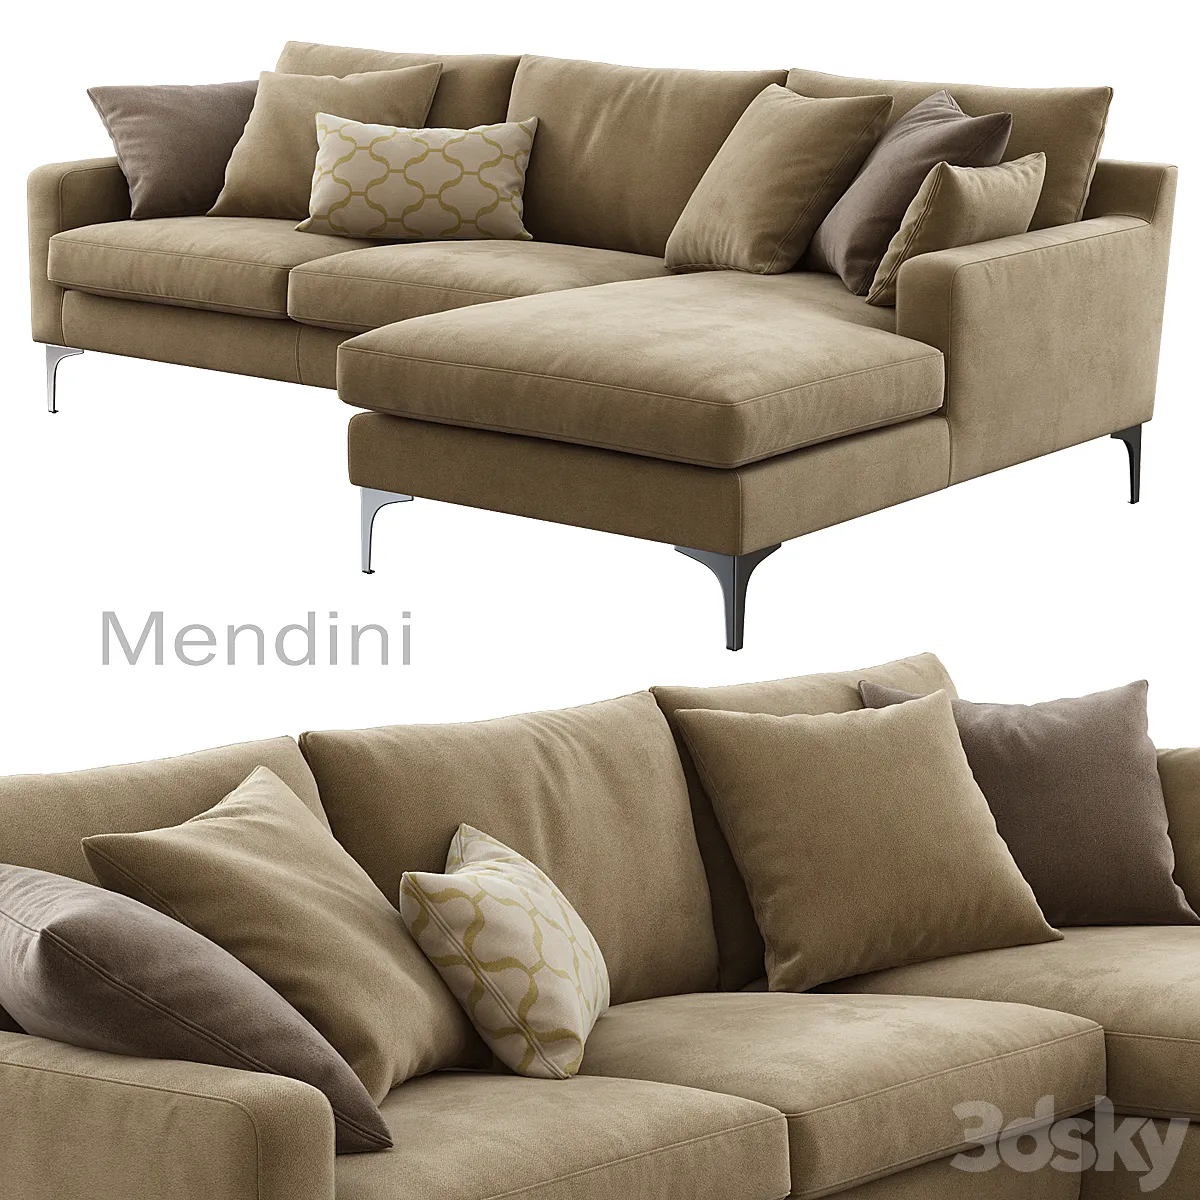 3dsky - Made Mendini (Corner Sofa)